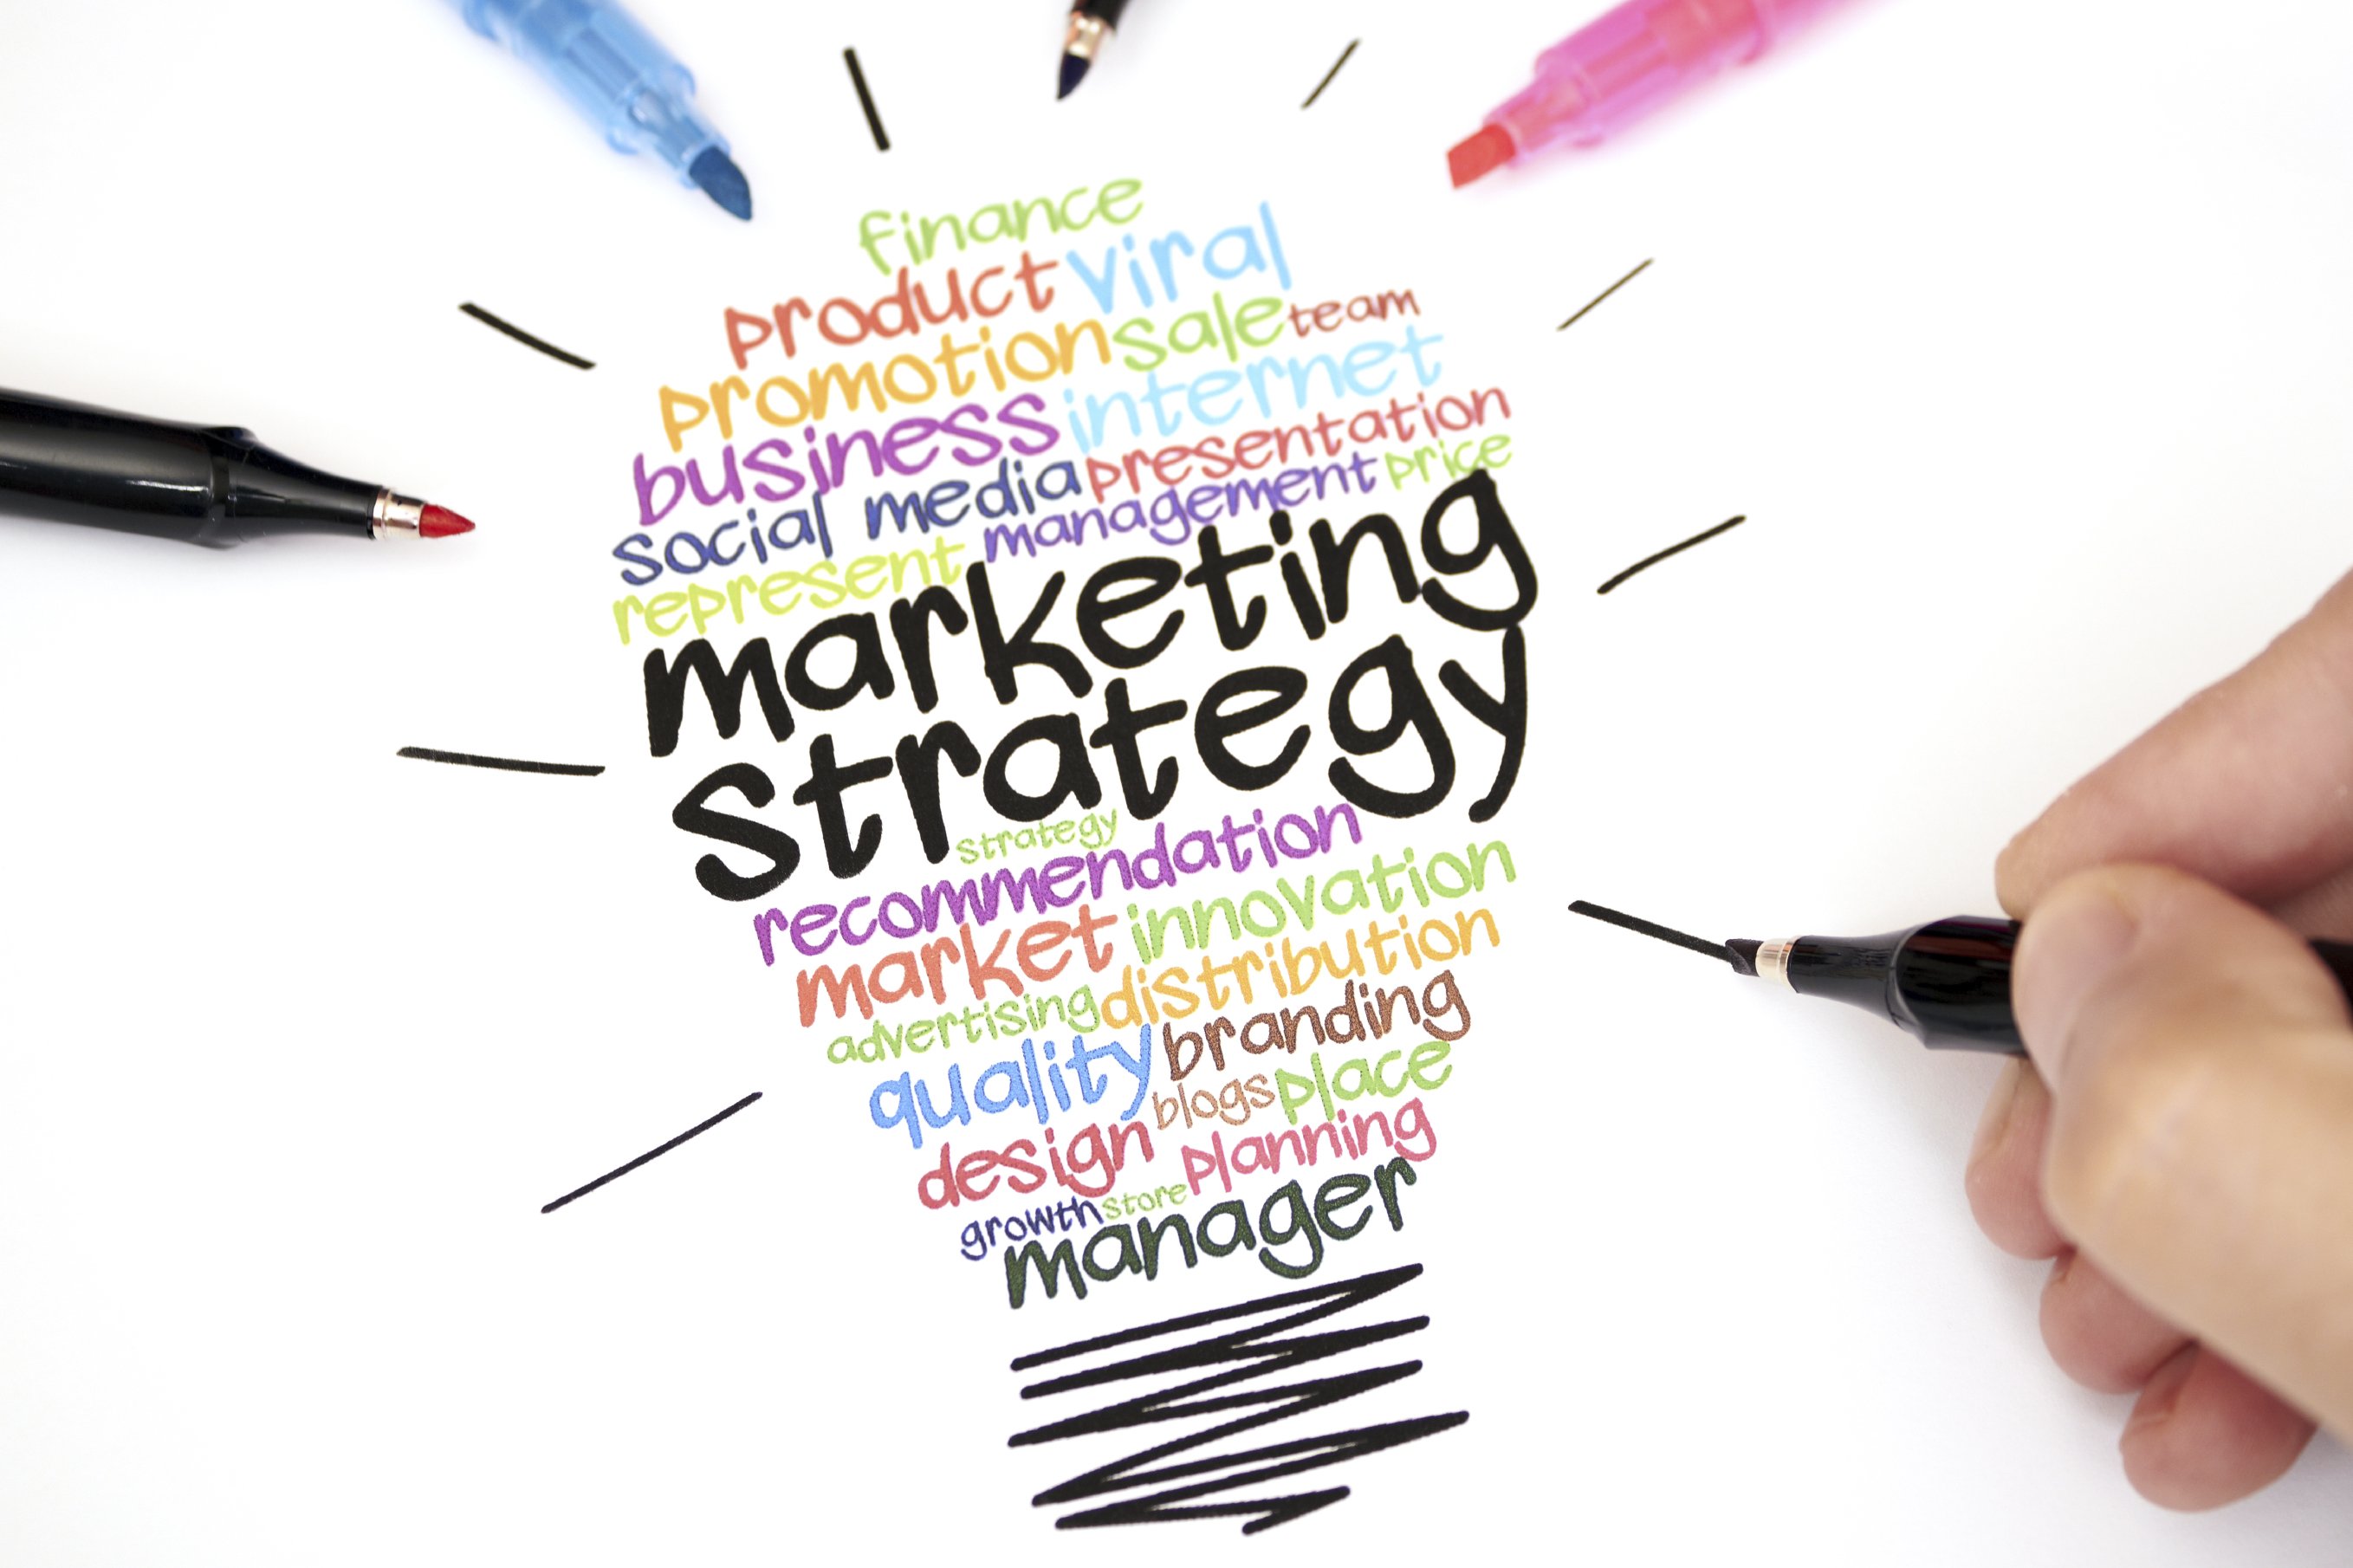 LINC: Marketing Strategy